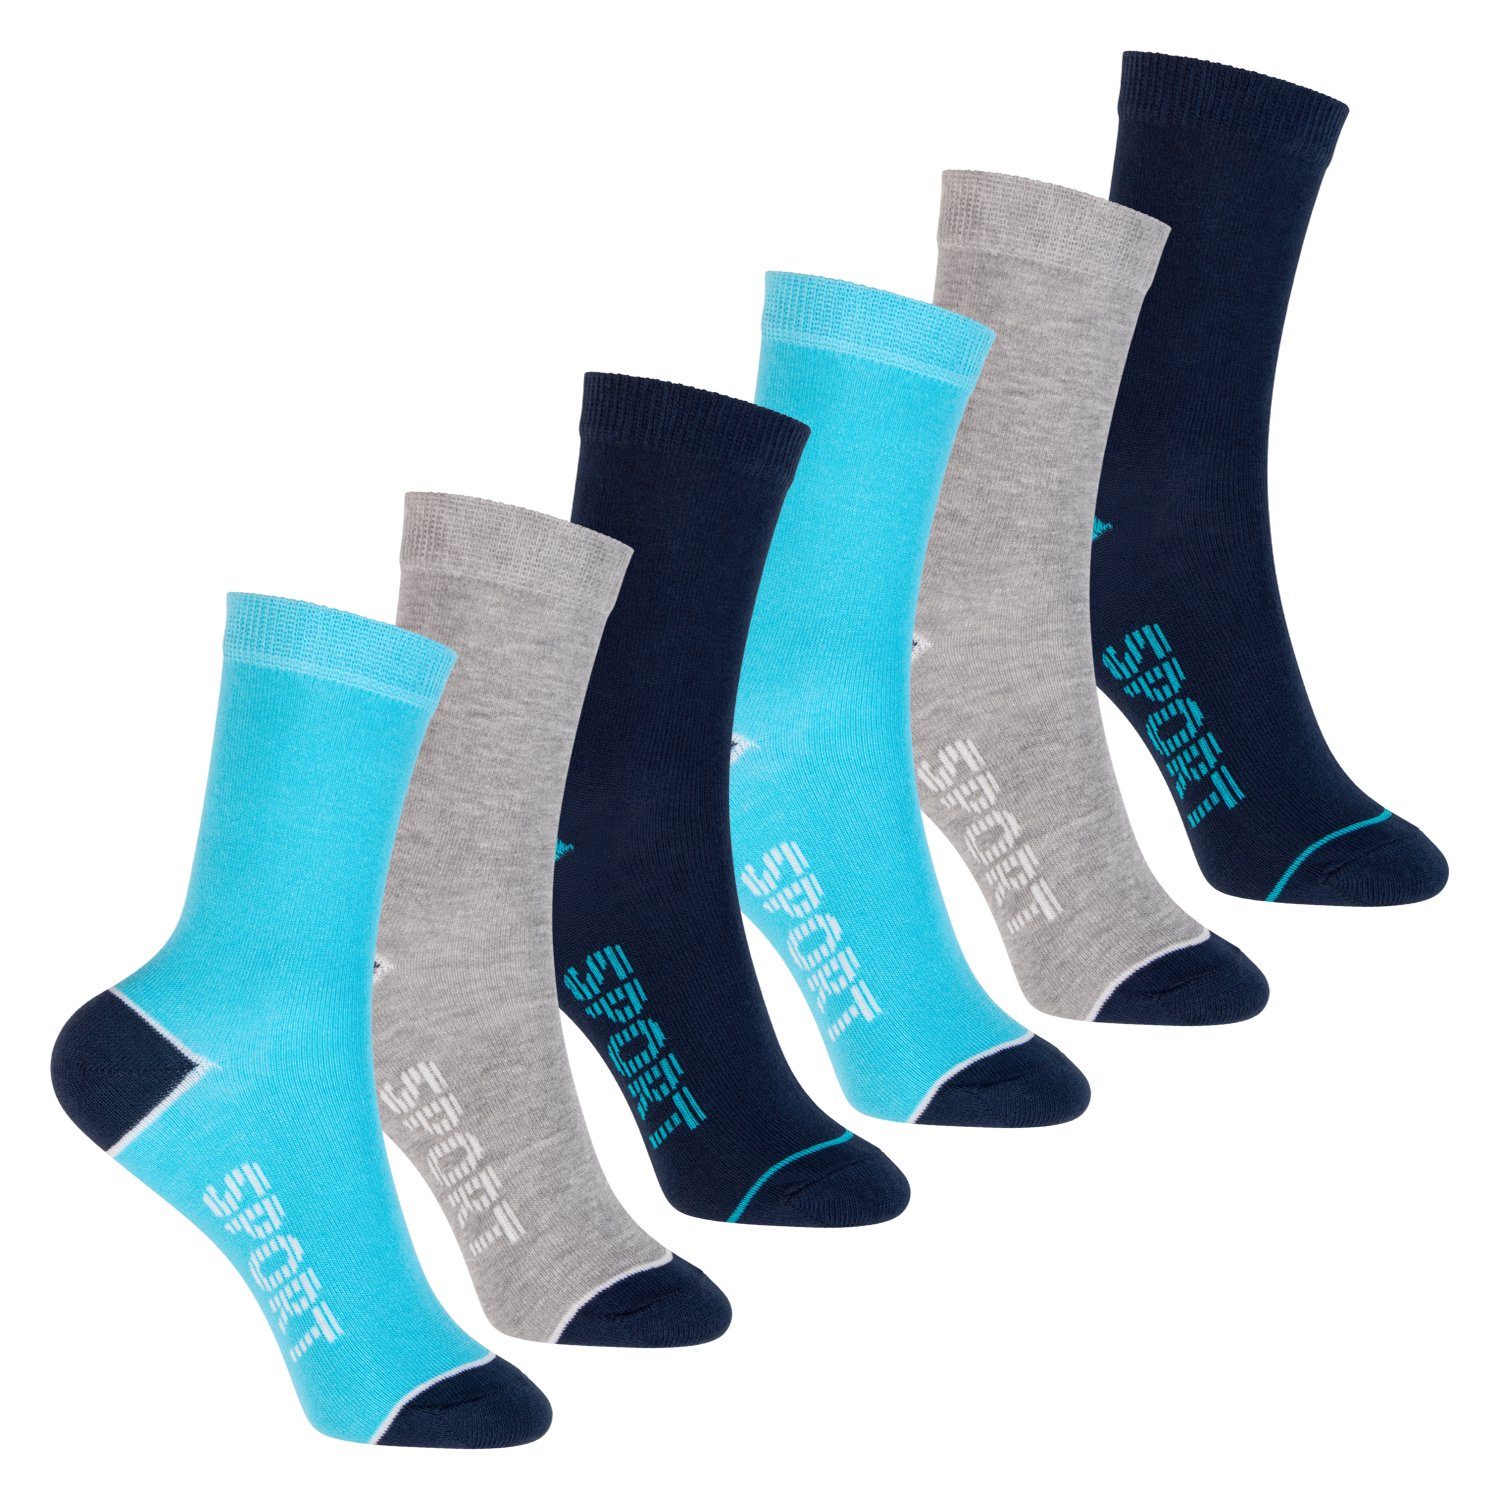 Footstar Basicsocken Bunte Baumwoll Socken für Kinder (6er Pack) Blau-Grau